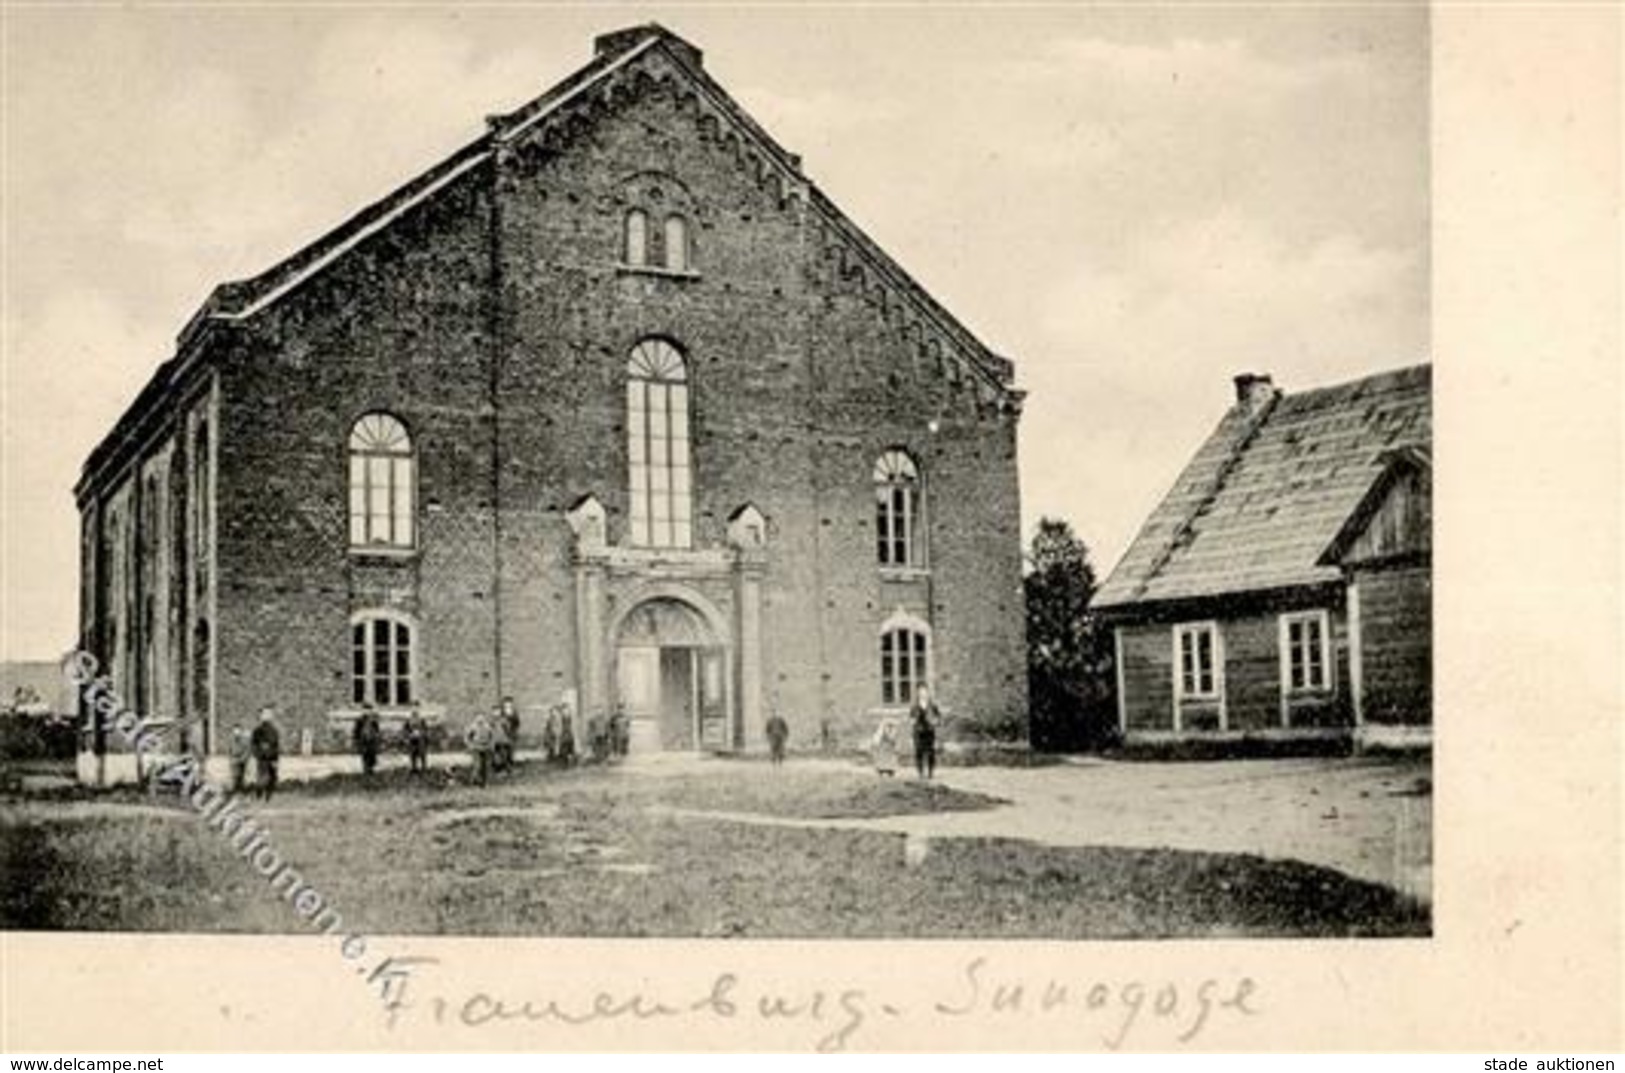 Synagoge FRAUENBURG,Masuren - I Synagogue - Judaisme